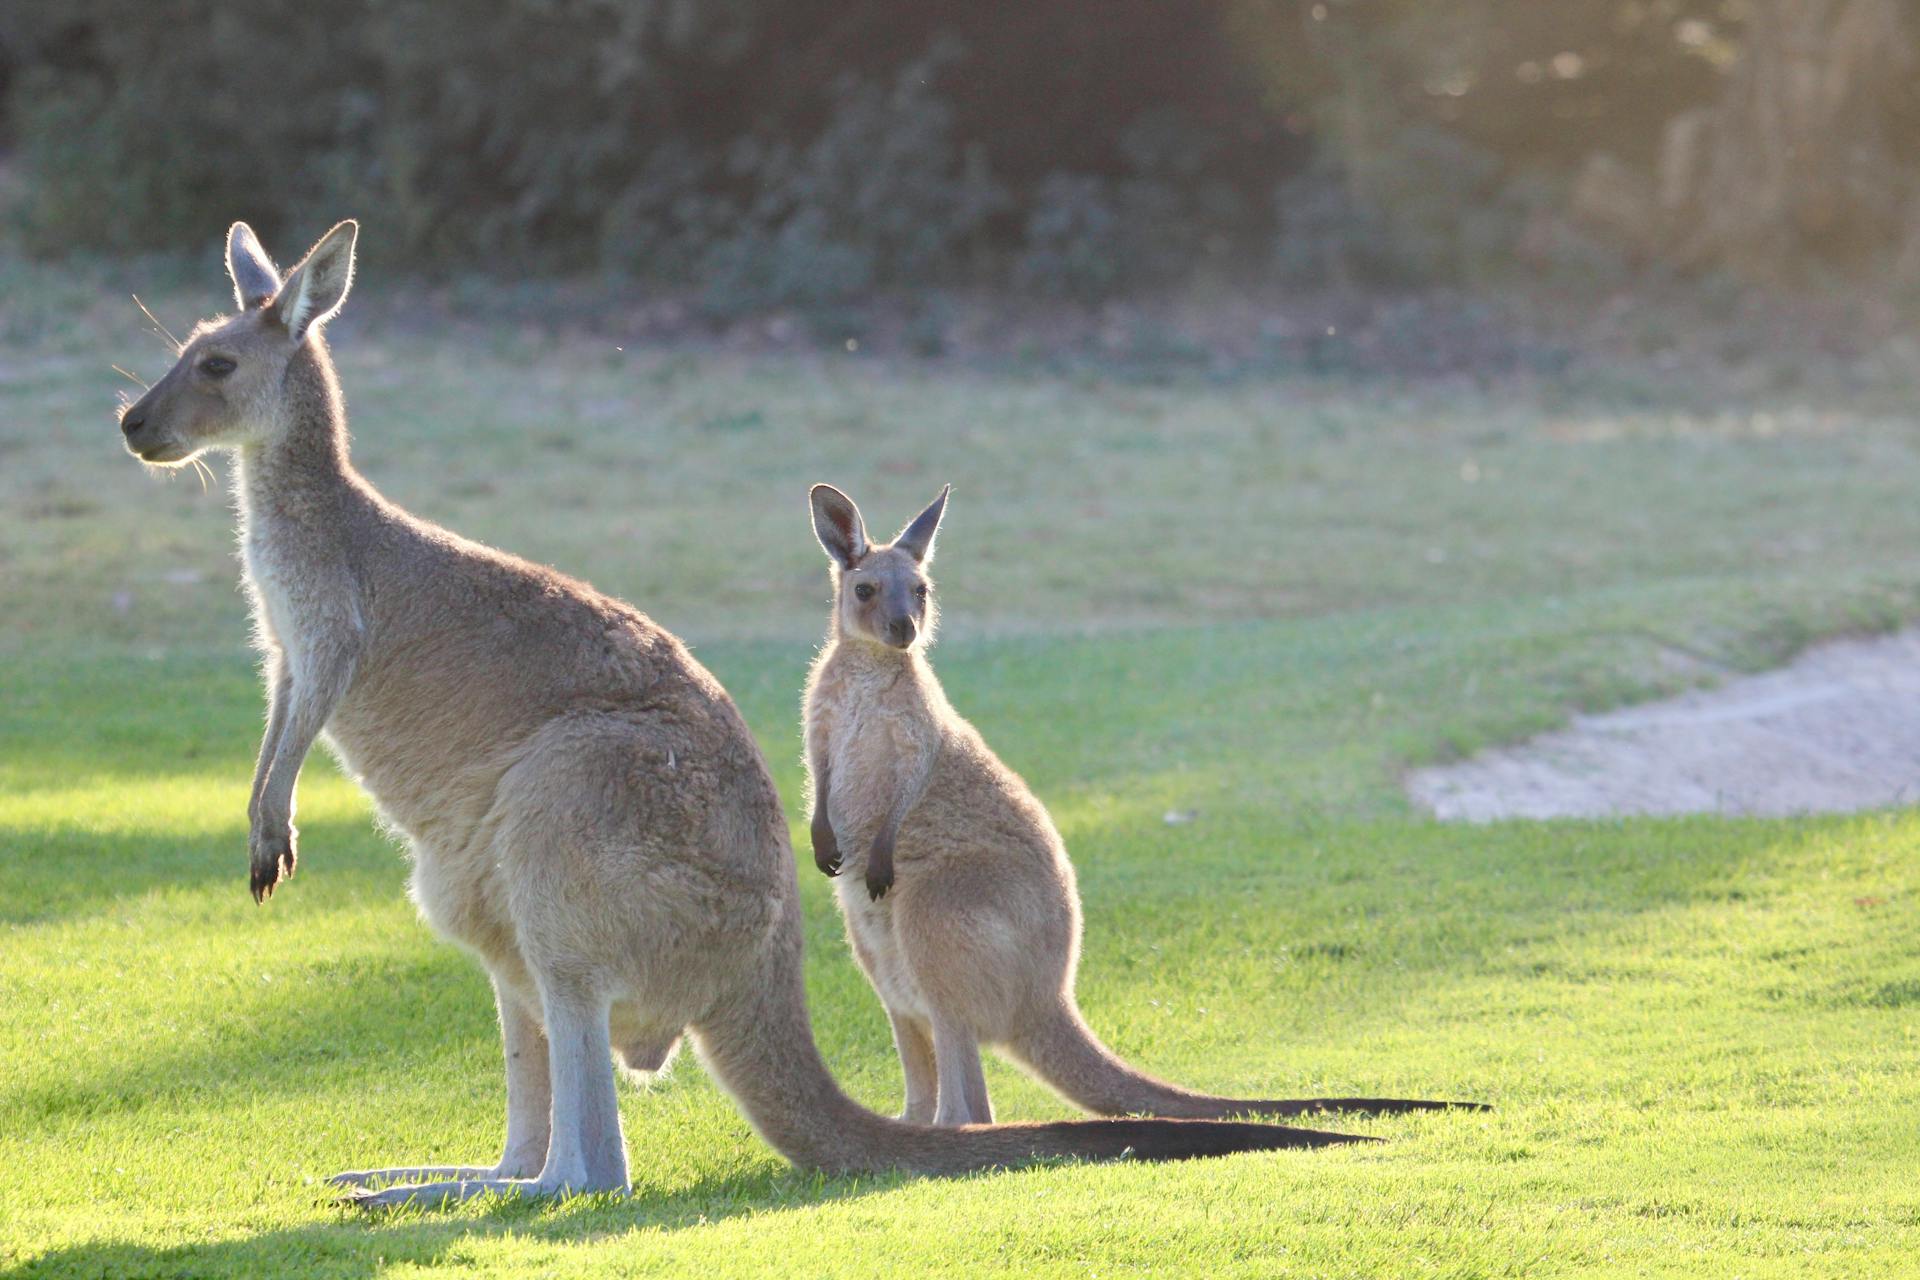 A Kangaroo and a Joey